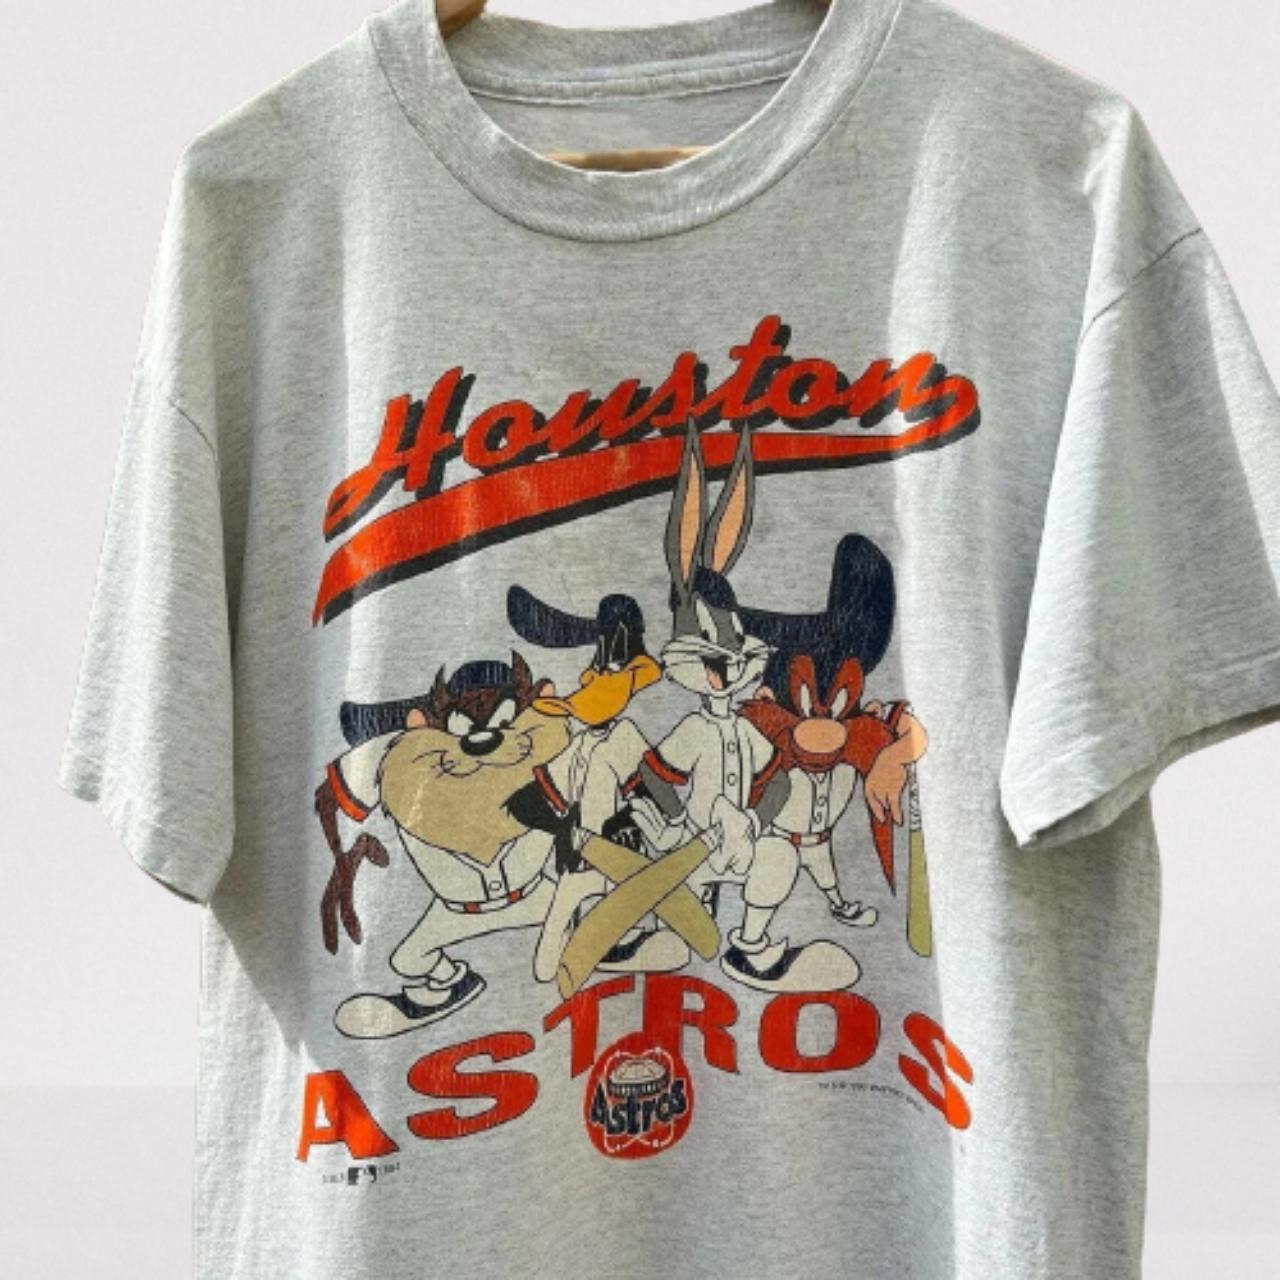 Vintage Houston Baseball shirt, Retro Astros 90s shirt